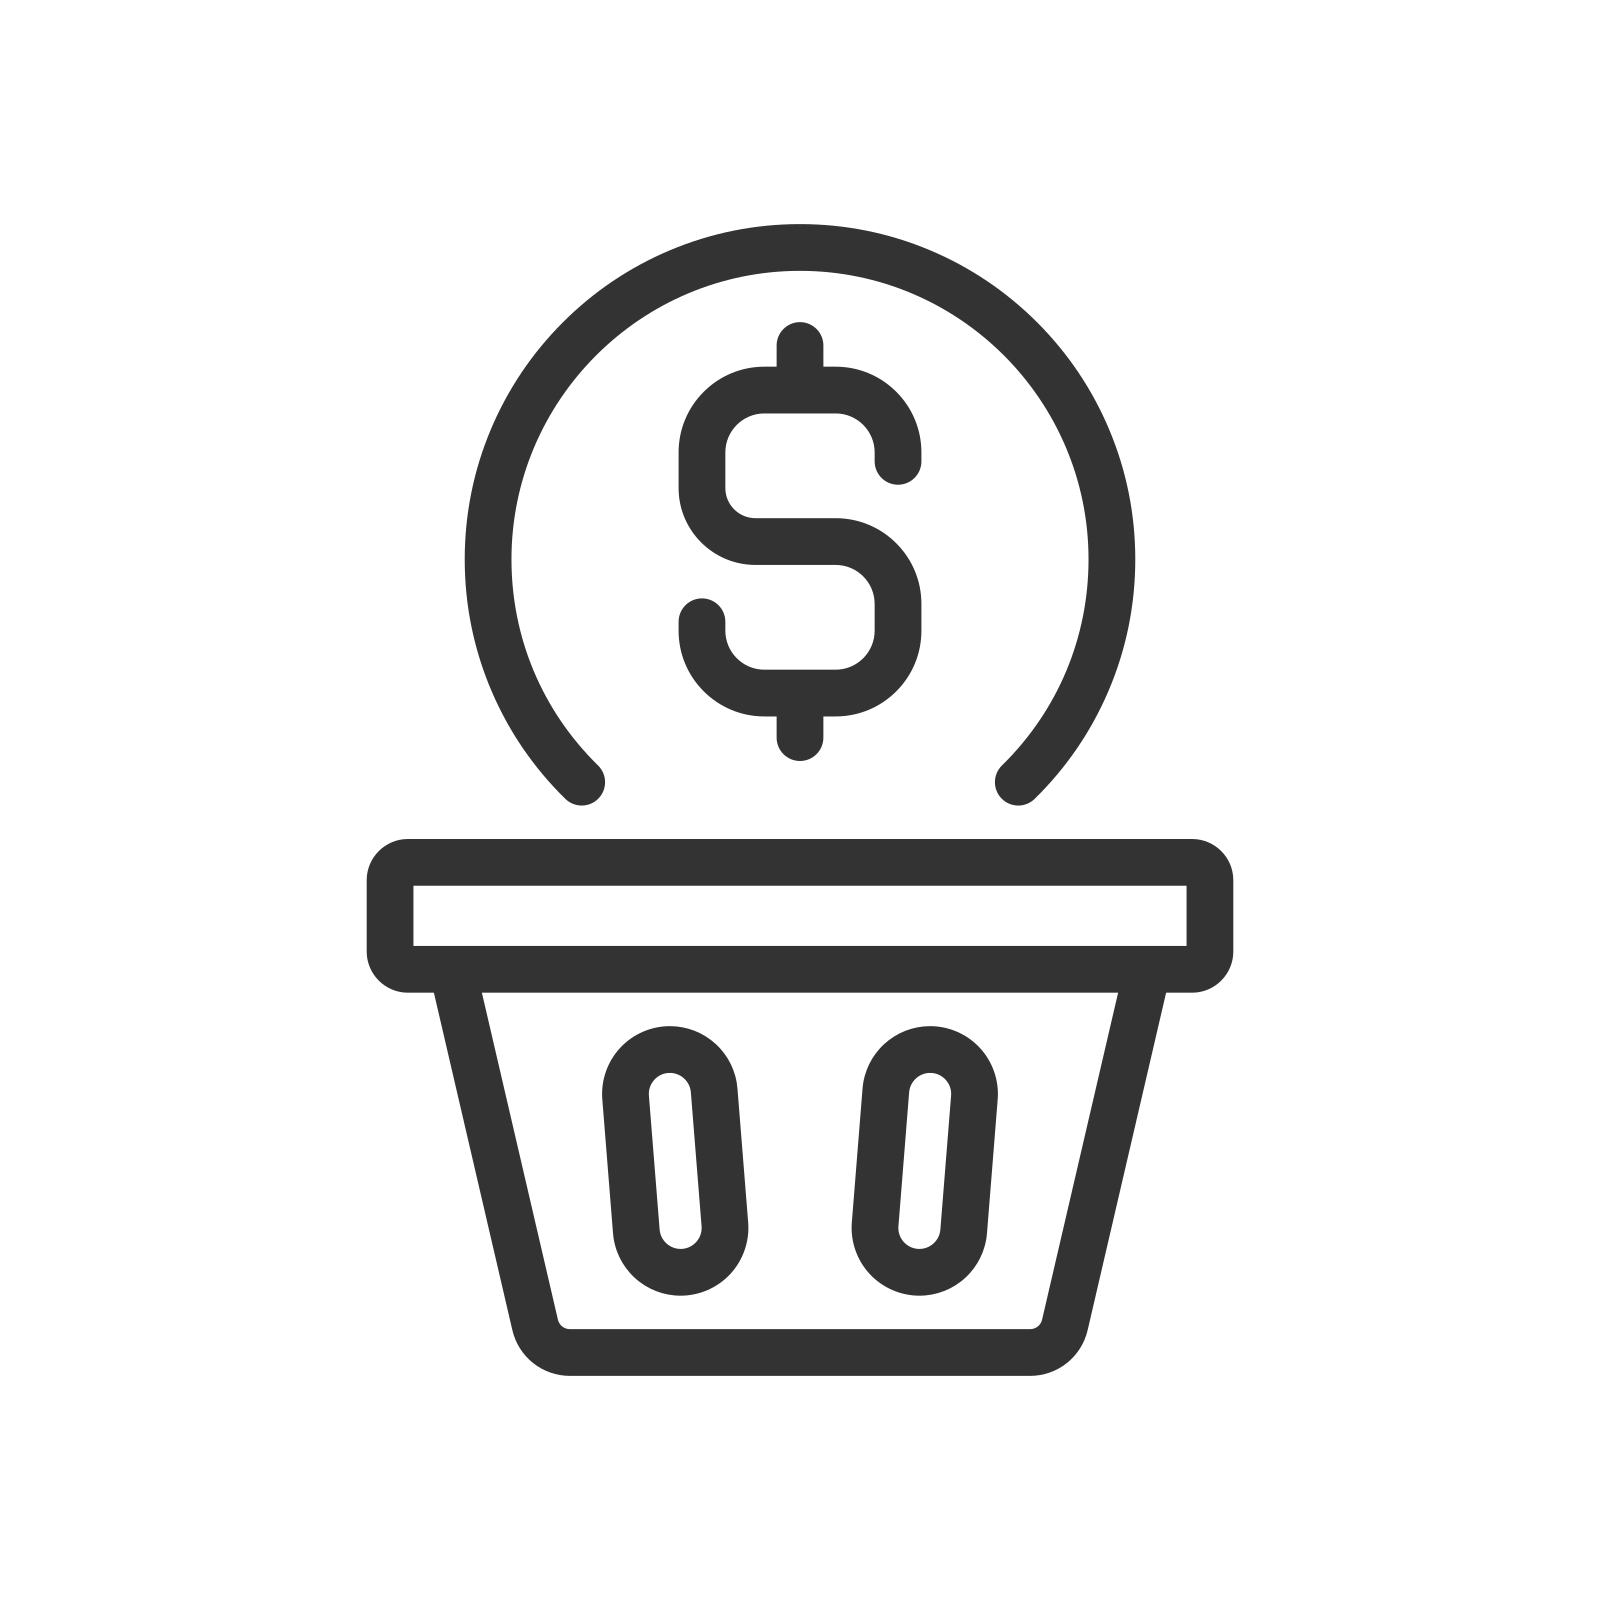 external Wasting-Money-money-stroke-papa-vector icon